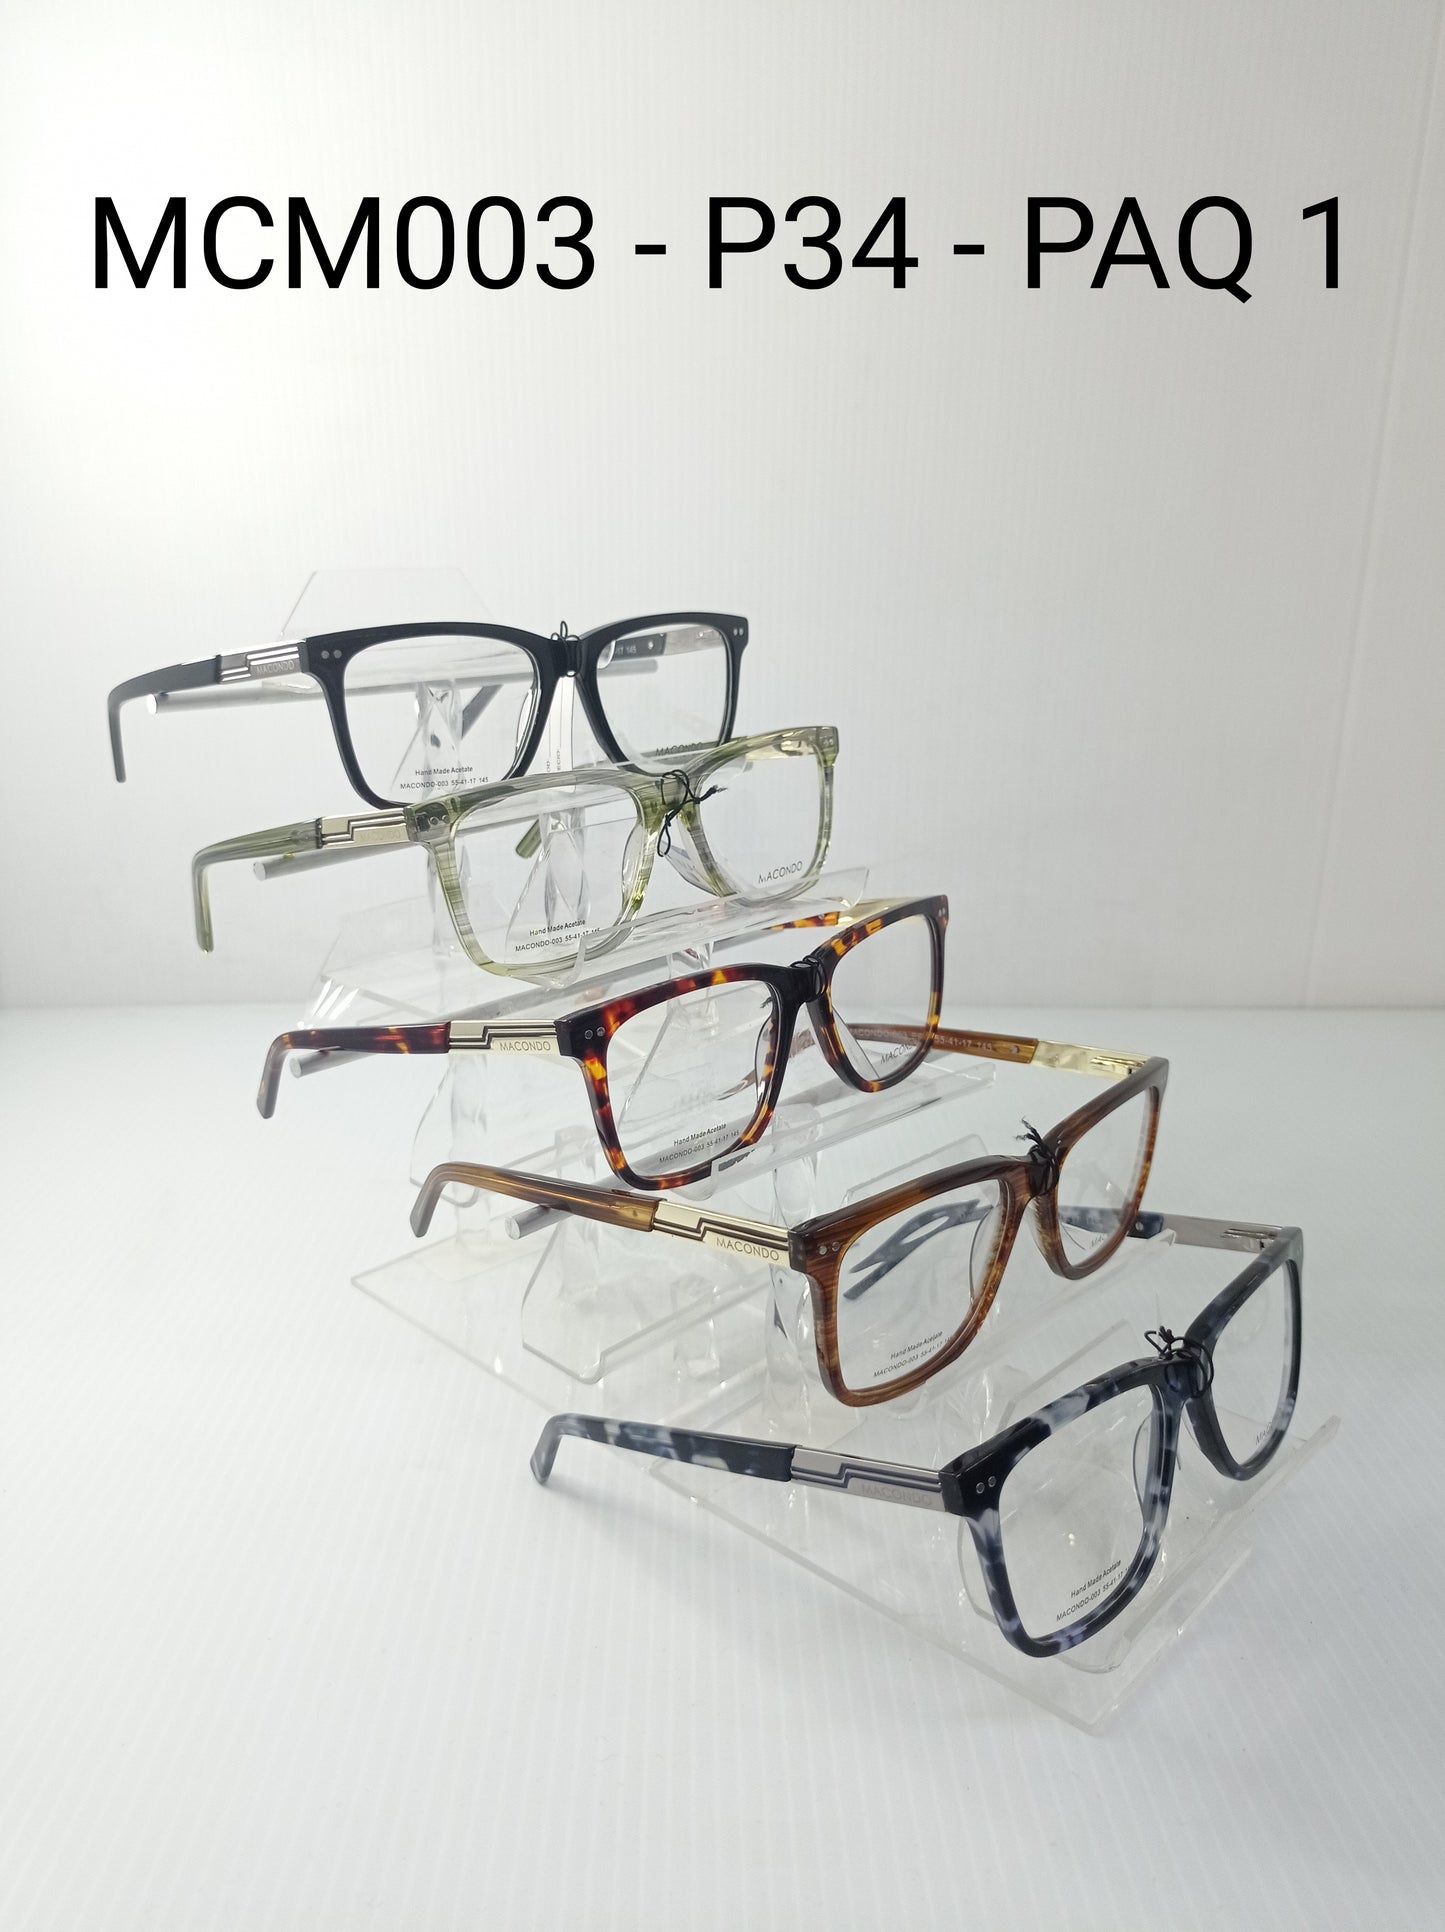 MACONDO - MCM003 - P34